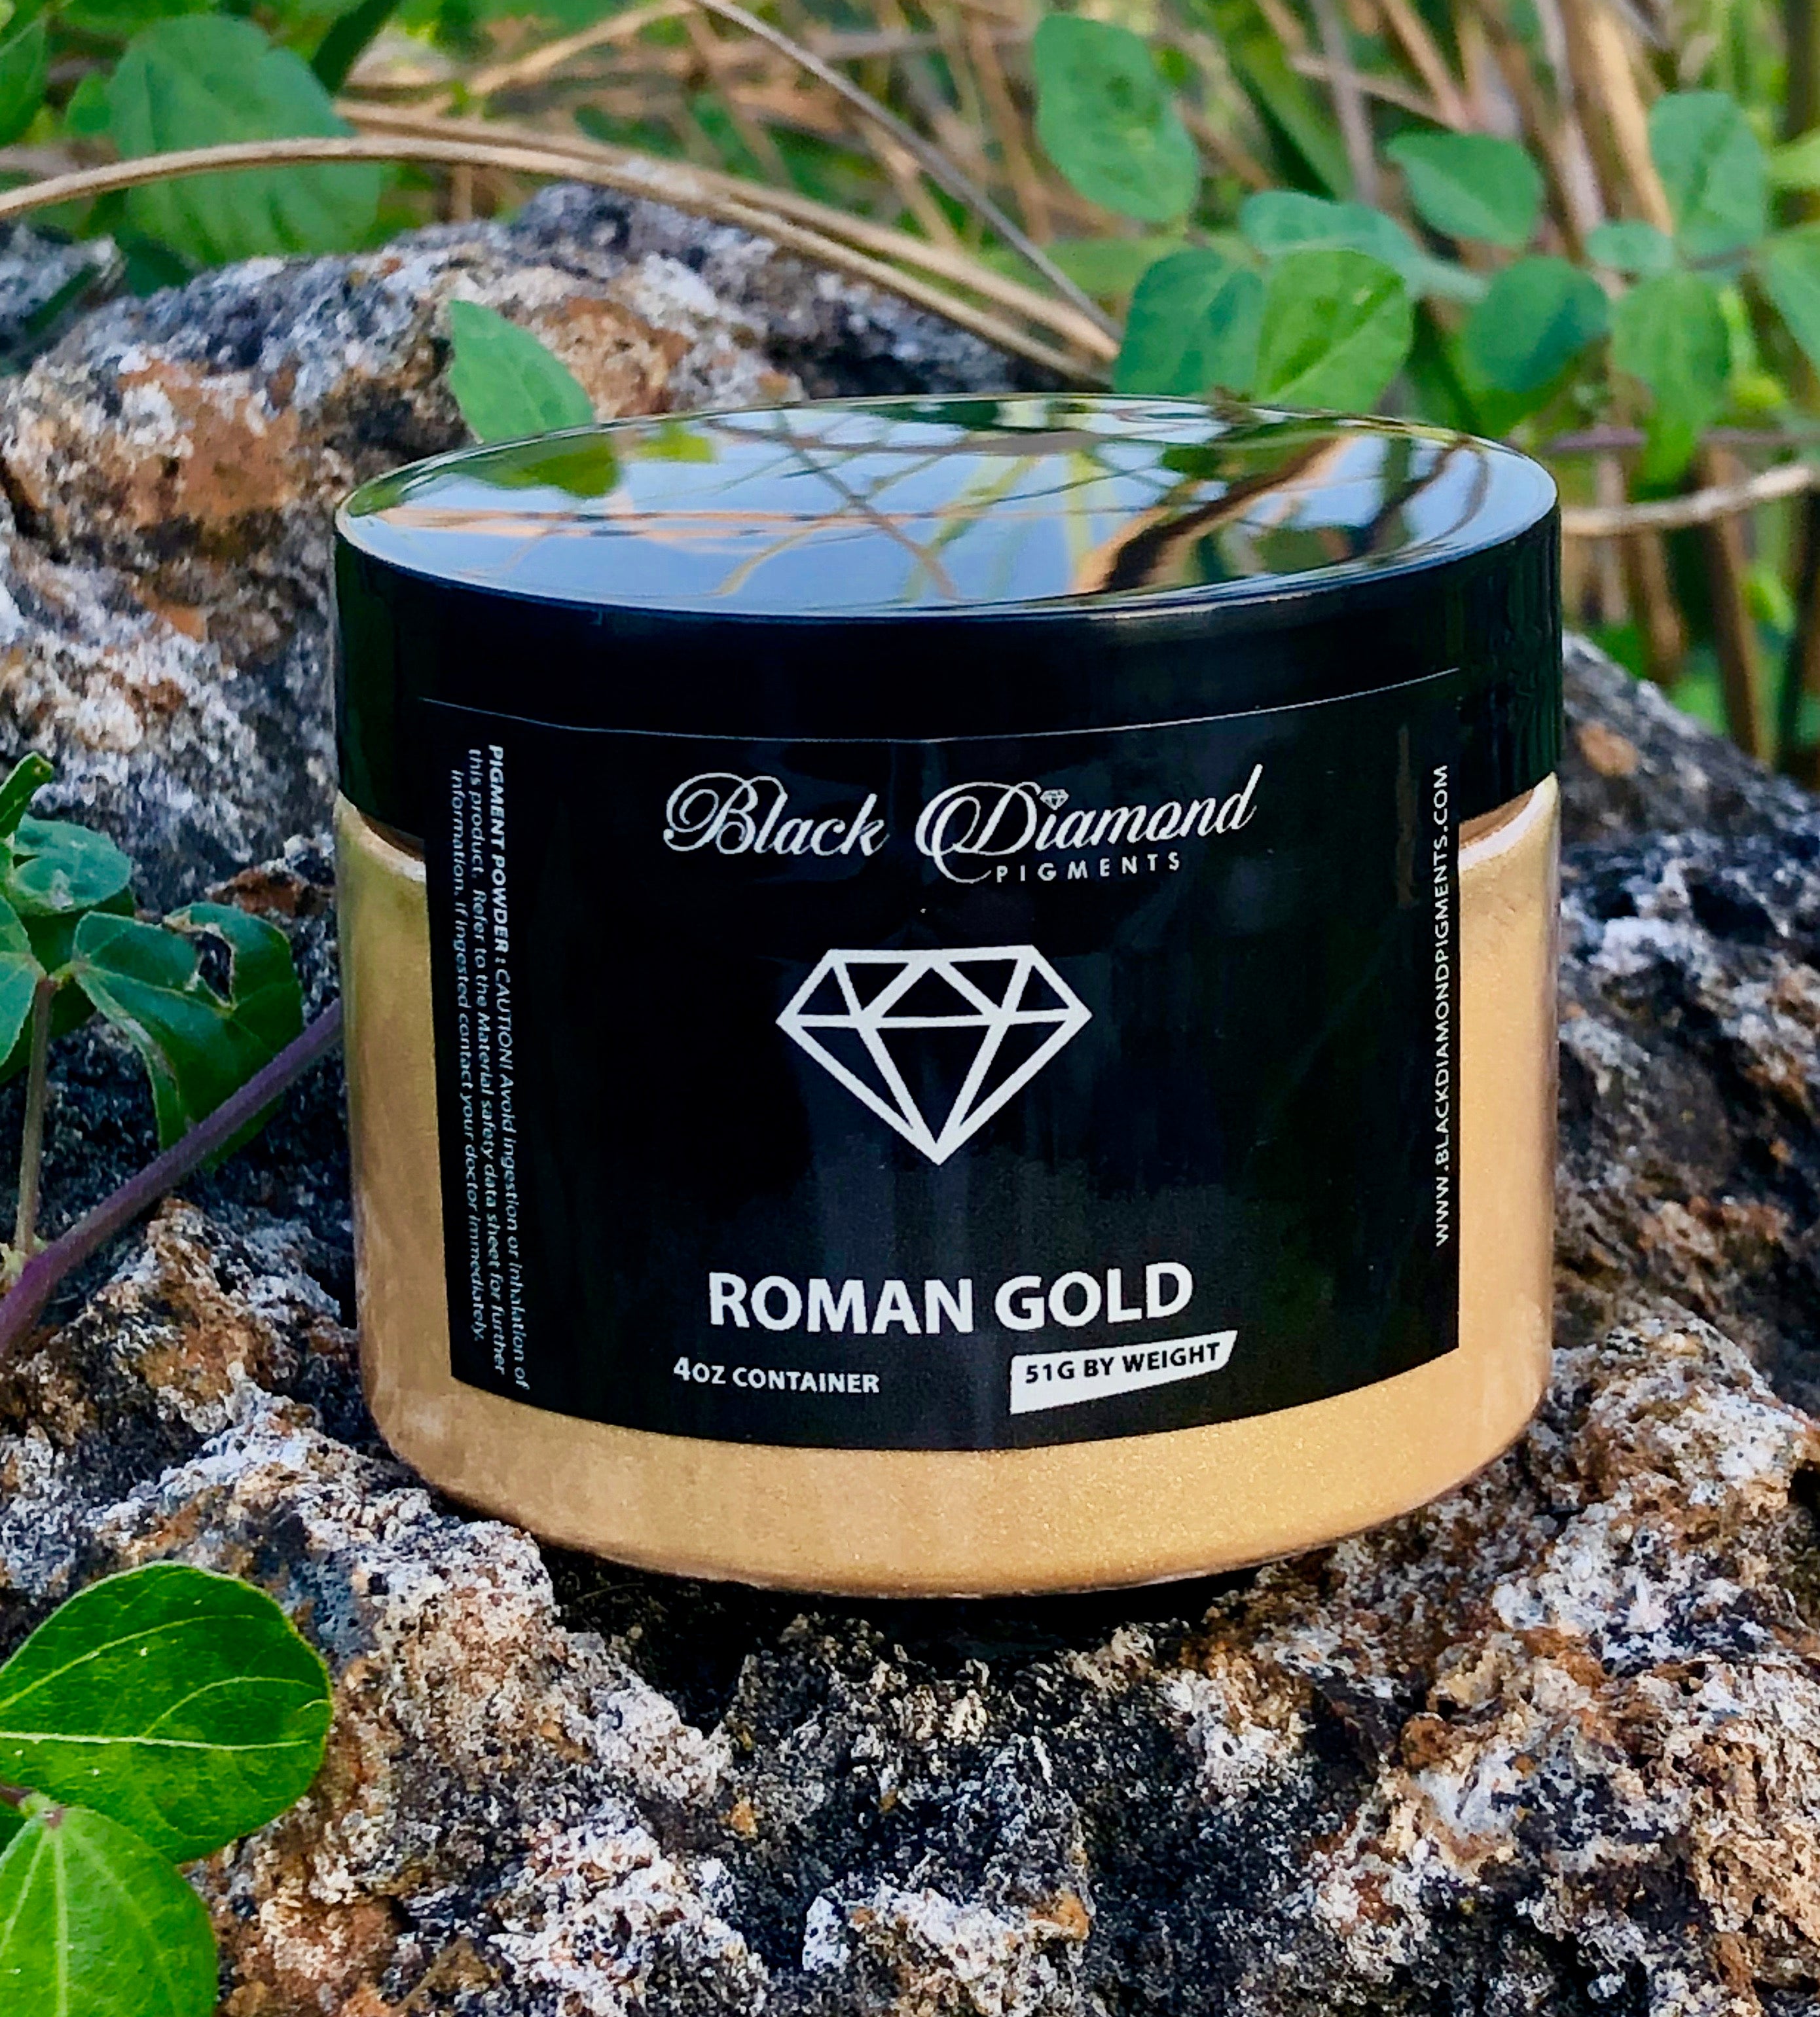 "ROMAN GOLD" Black Diamond Pigments